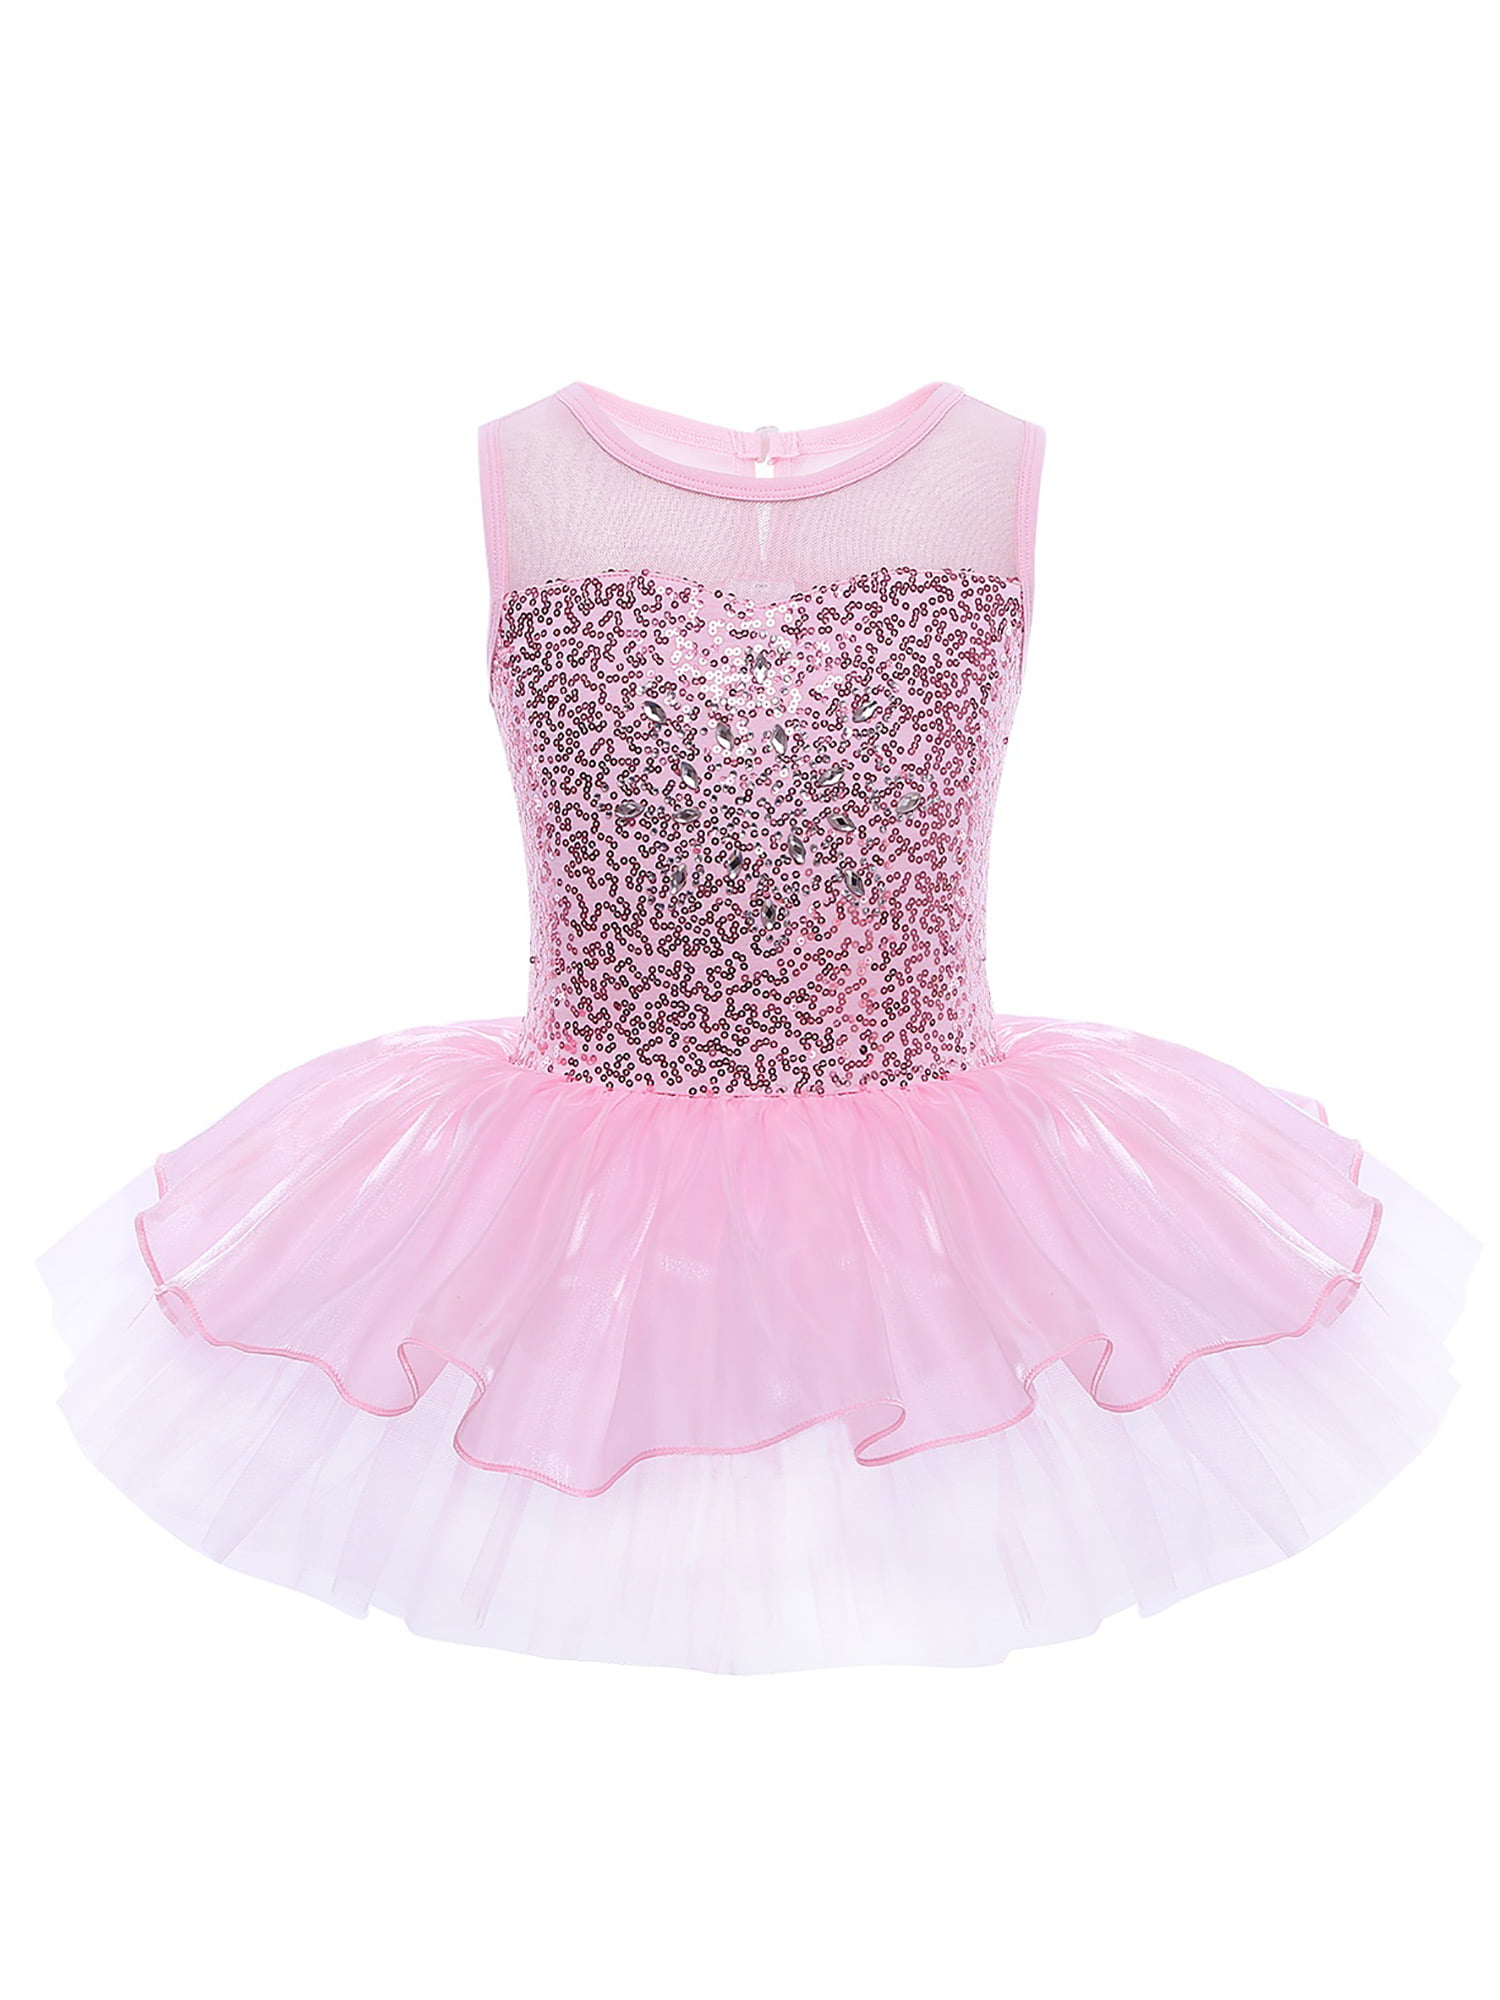 NWT Ballet Dance Leotard w/ Attached Three Tier Tulle Tutu Light Pink Girls Size 